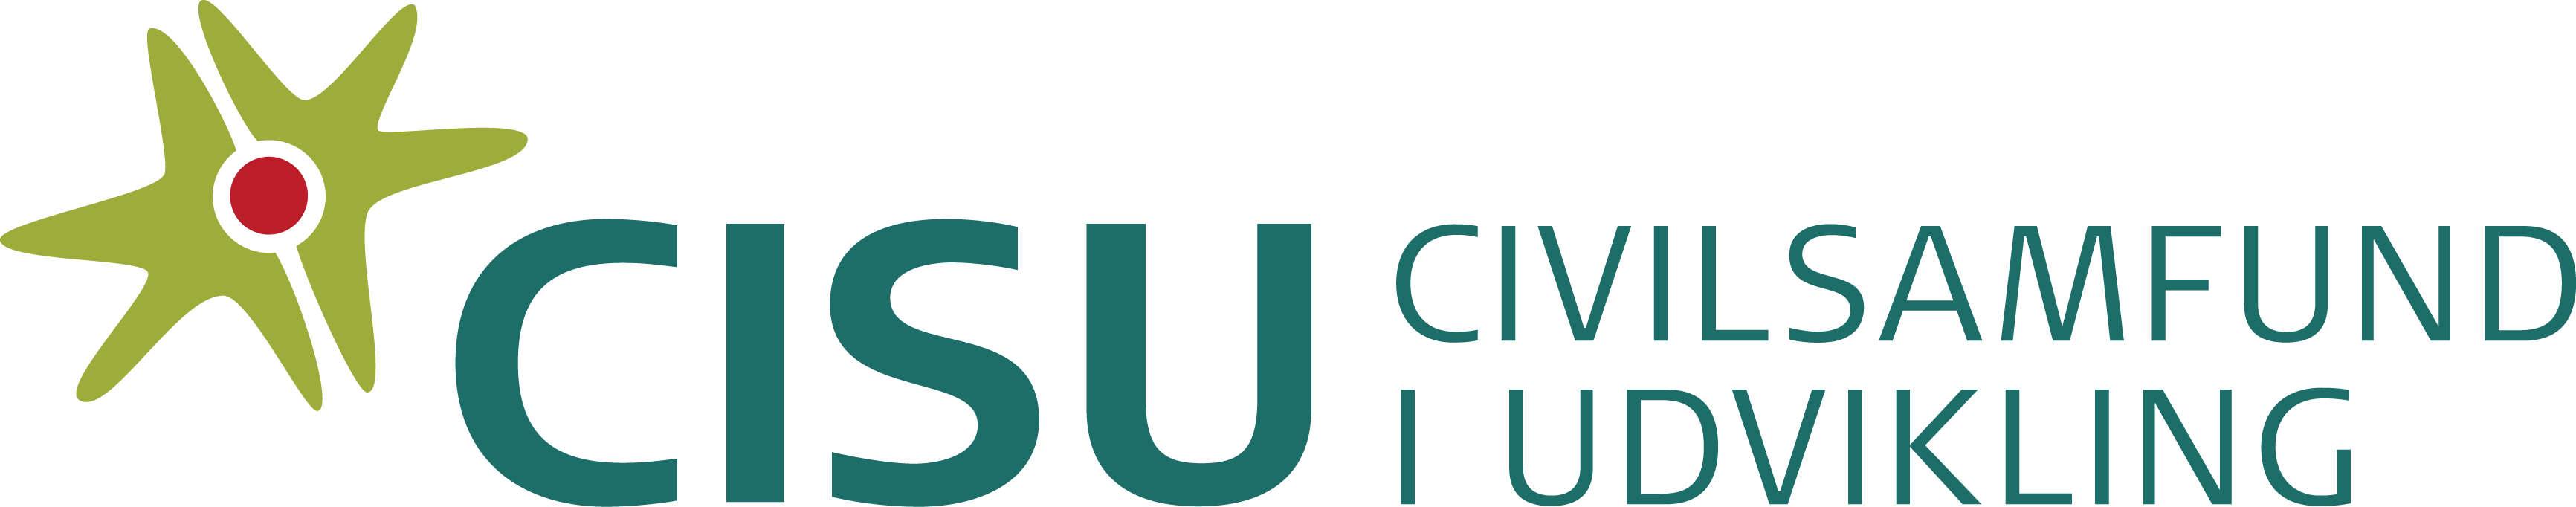 cisu logo